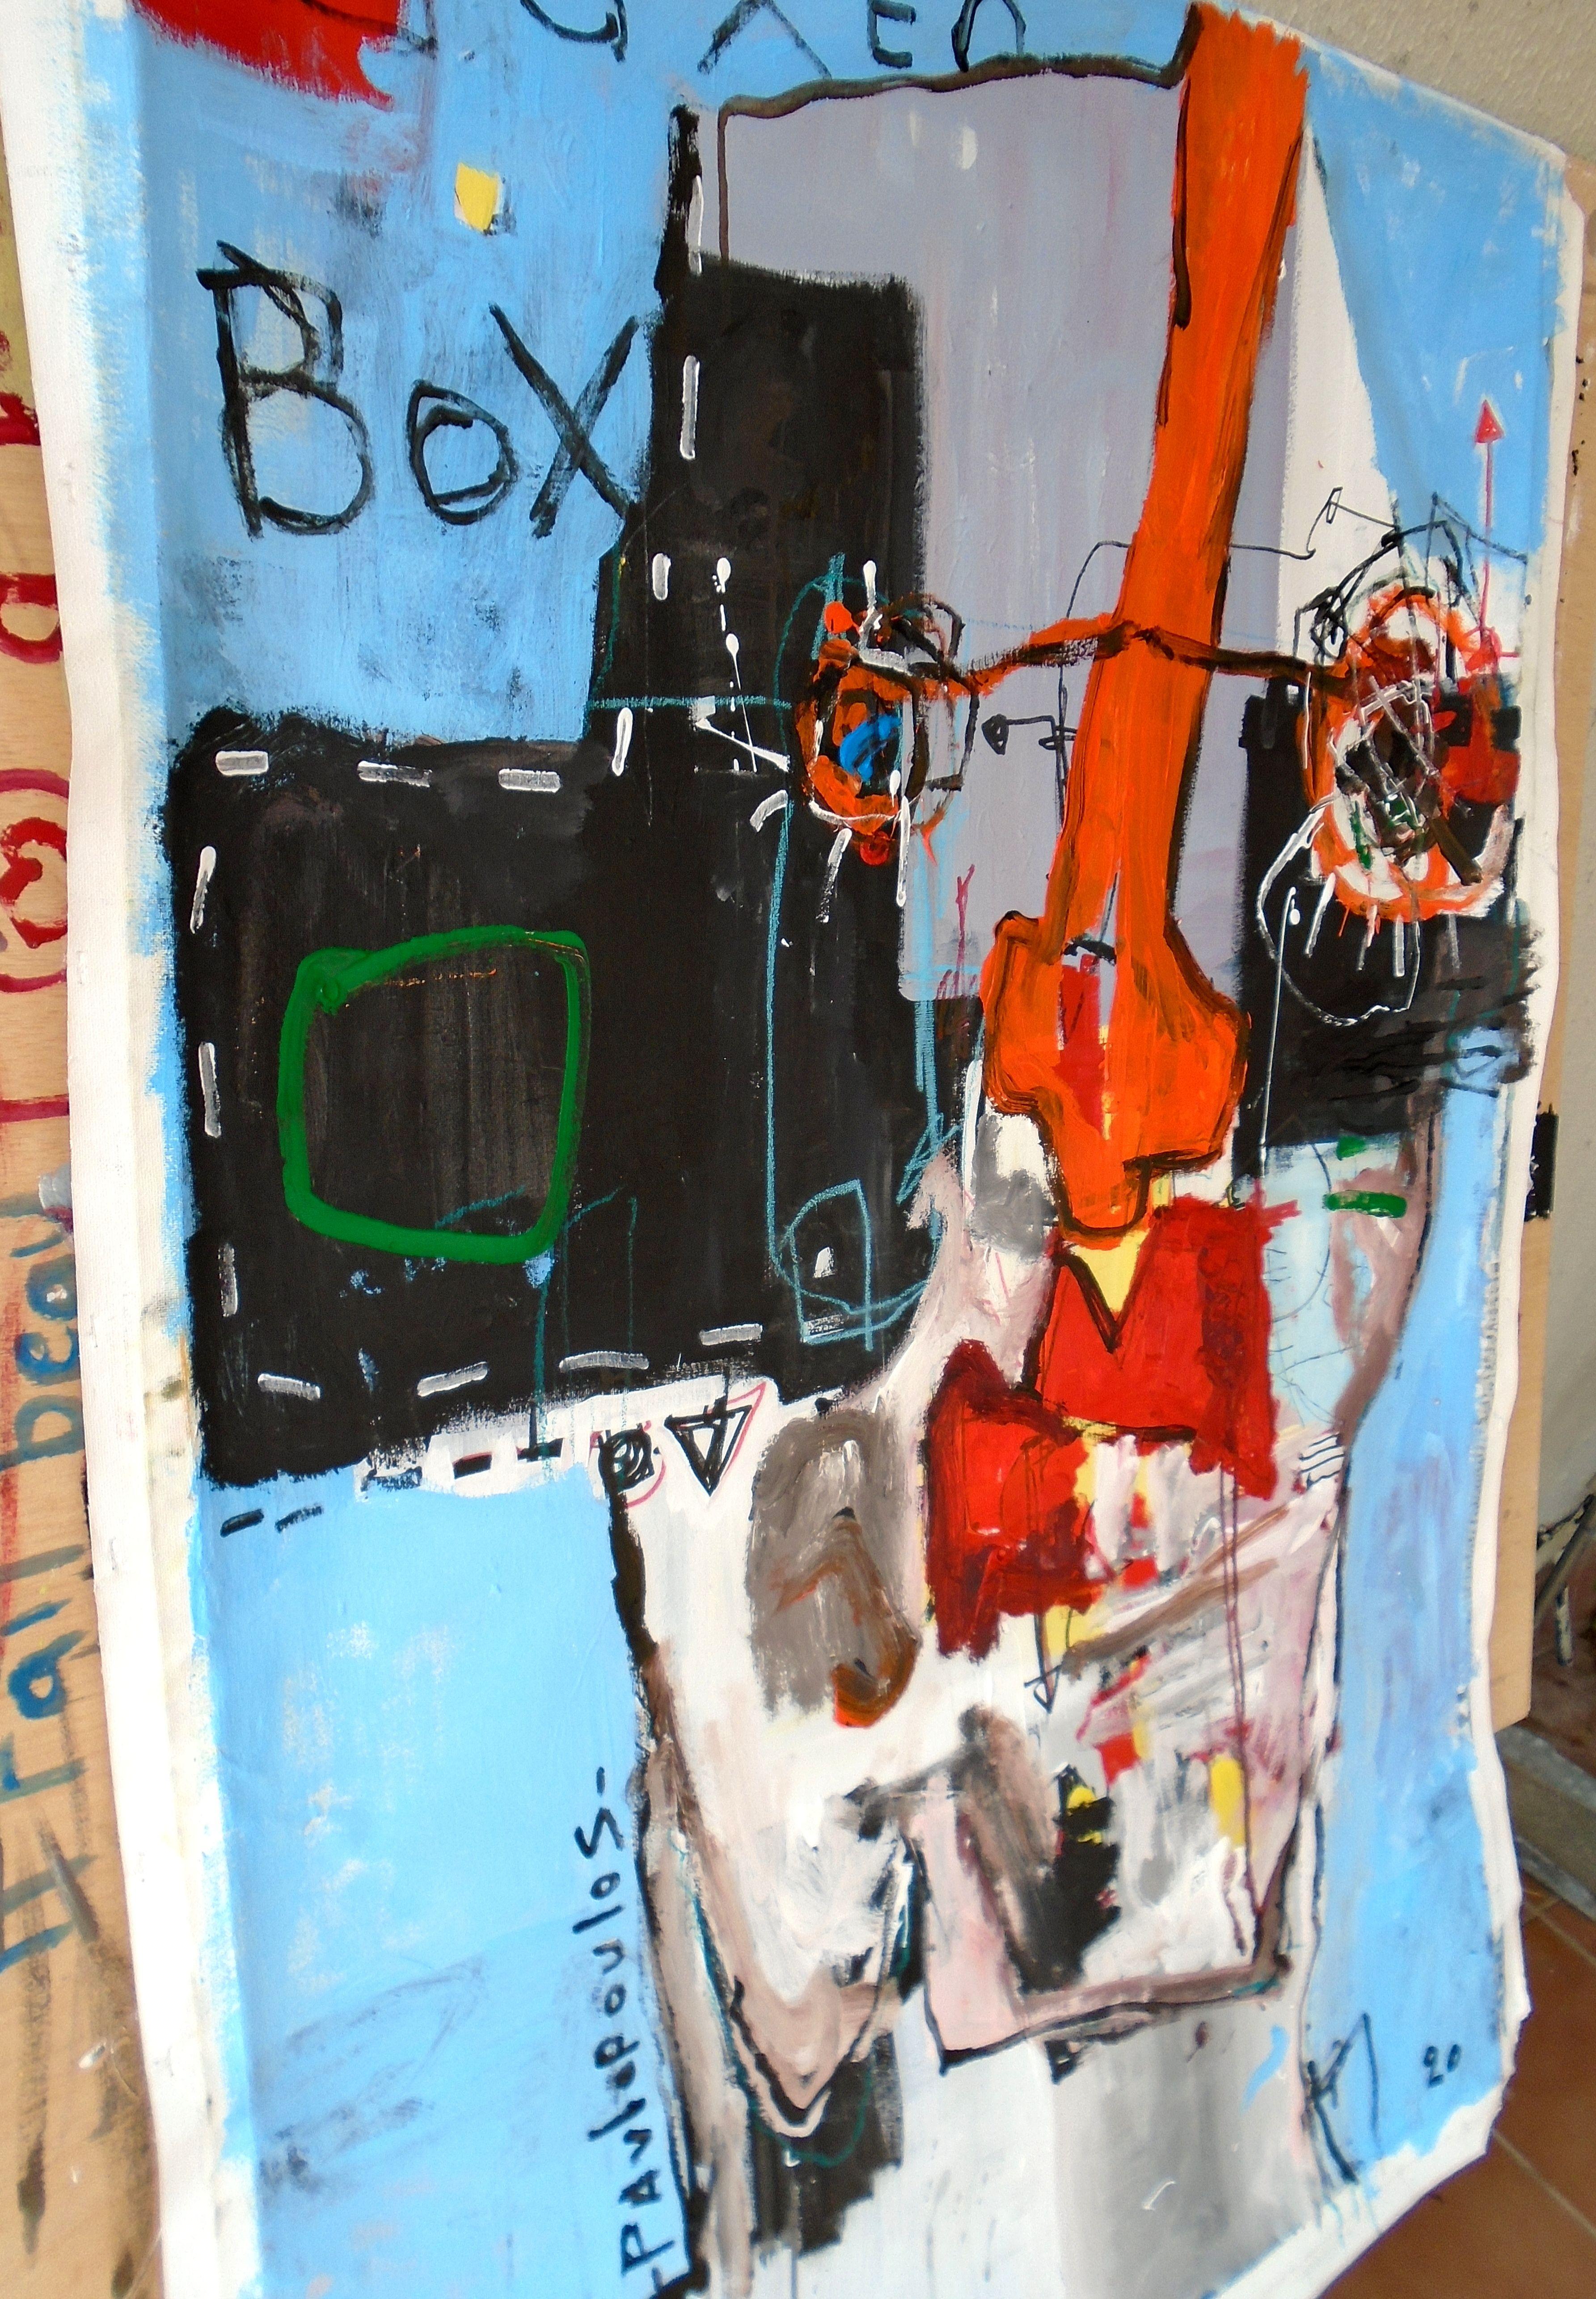 BOXEO, Gemälde, Acryl auf Leinwand (Abstrakter Expressionismus), Painting, von Dimitris Pavlopoulos